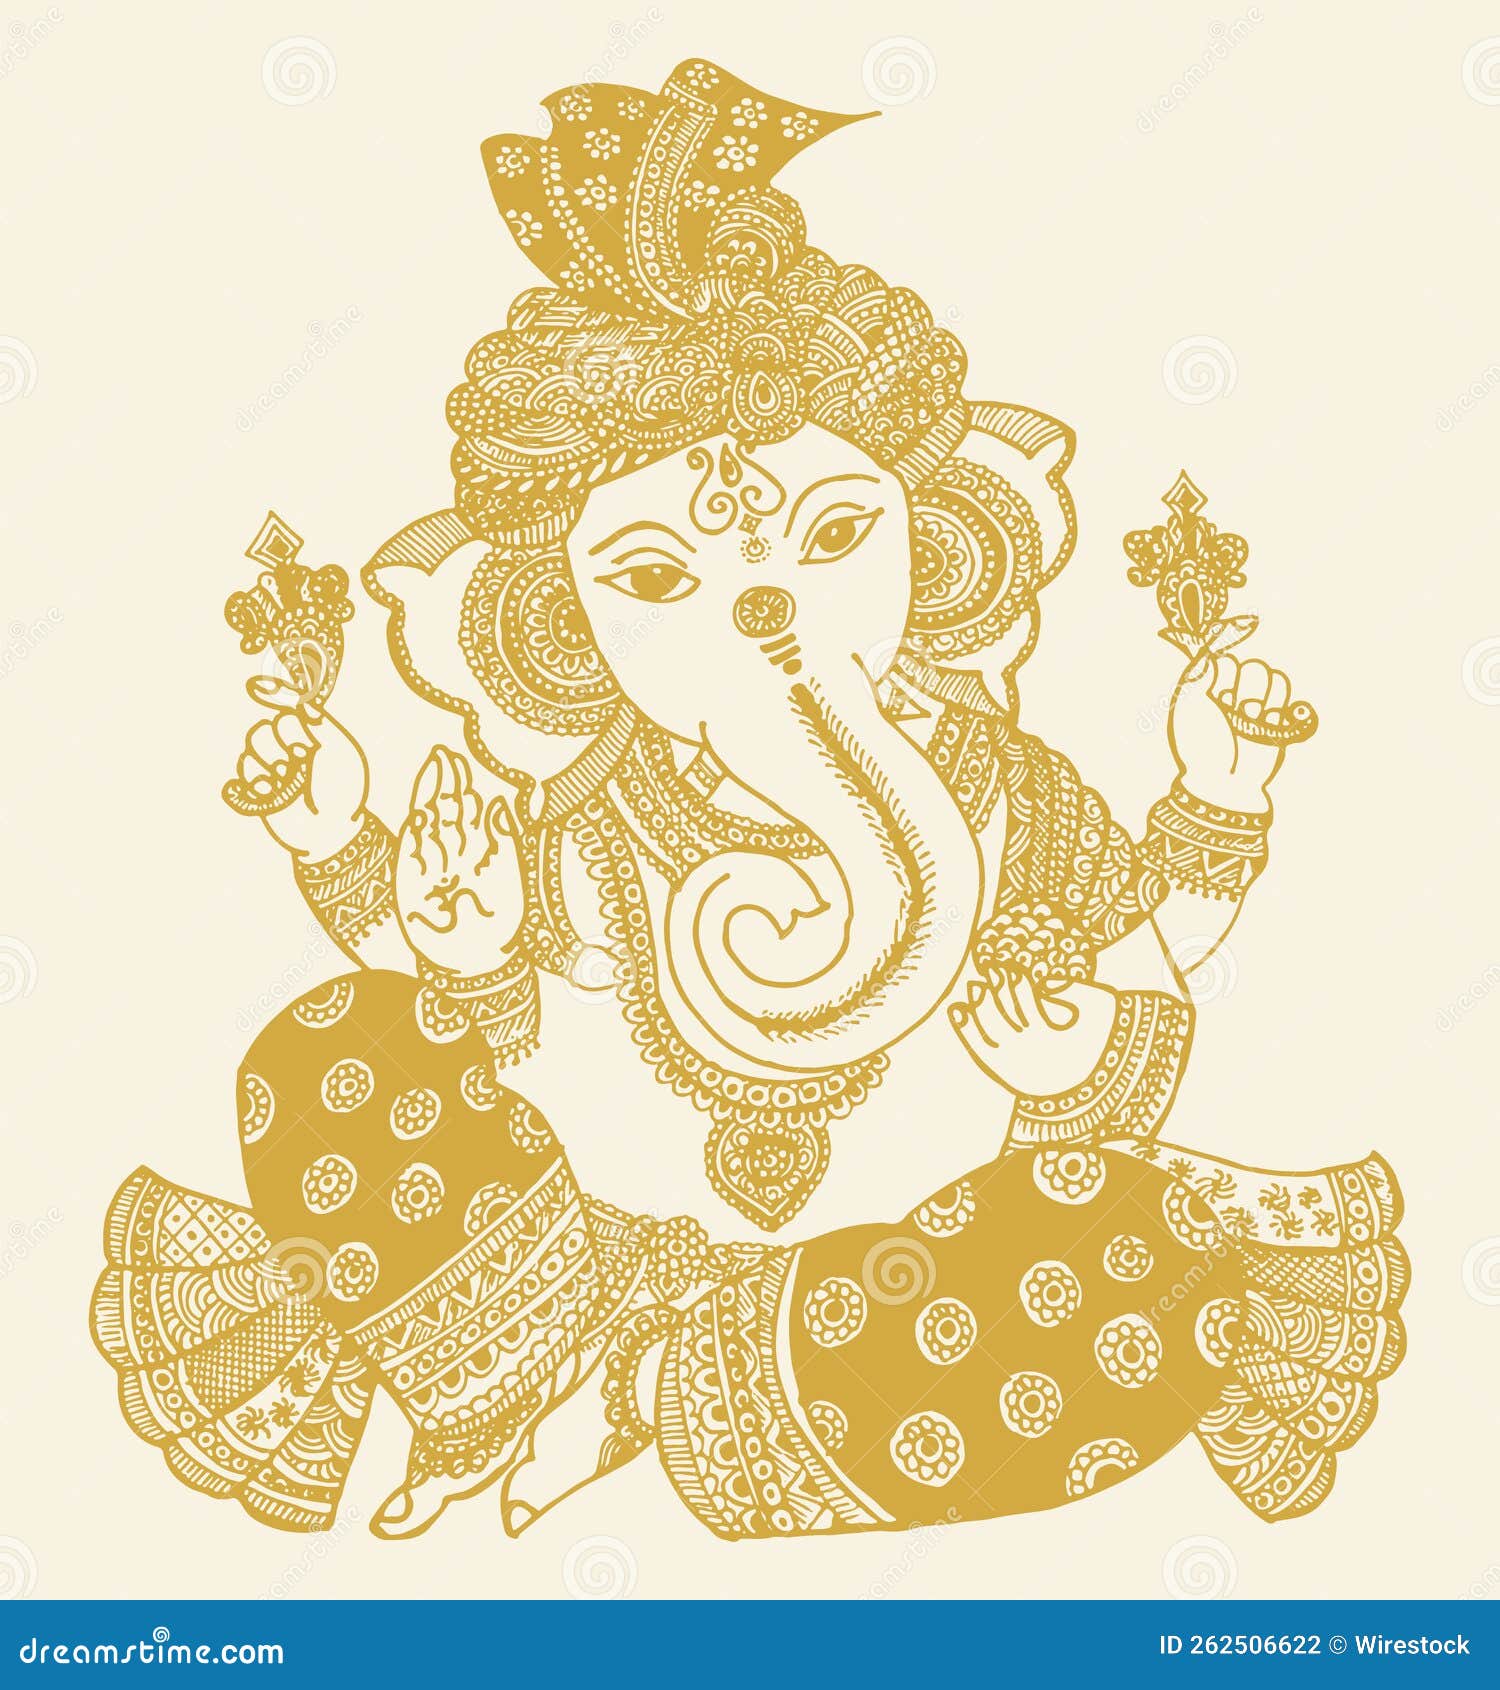 How To Draw Lord Ganesha| Vinayagar Drawing And Shading For Beginners| Easy  Ganesha drawing | Art - YouTube